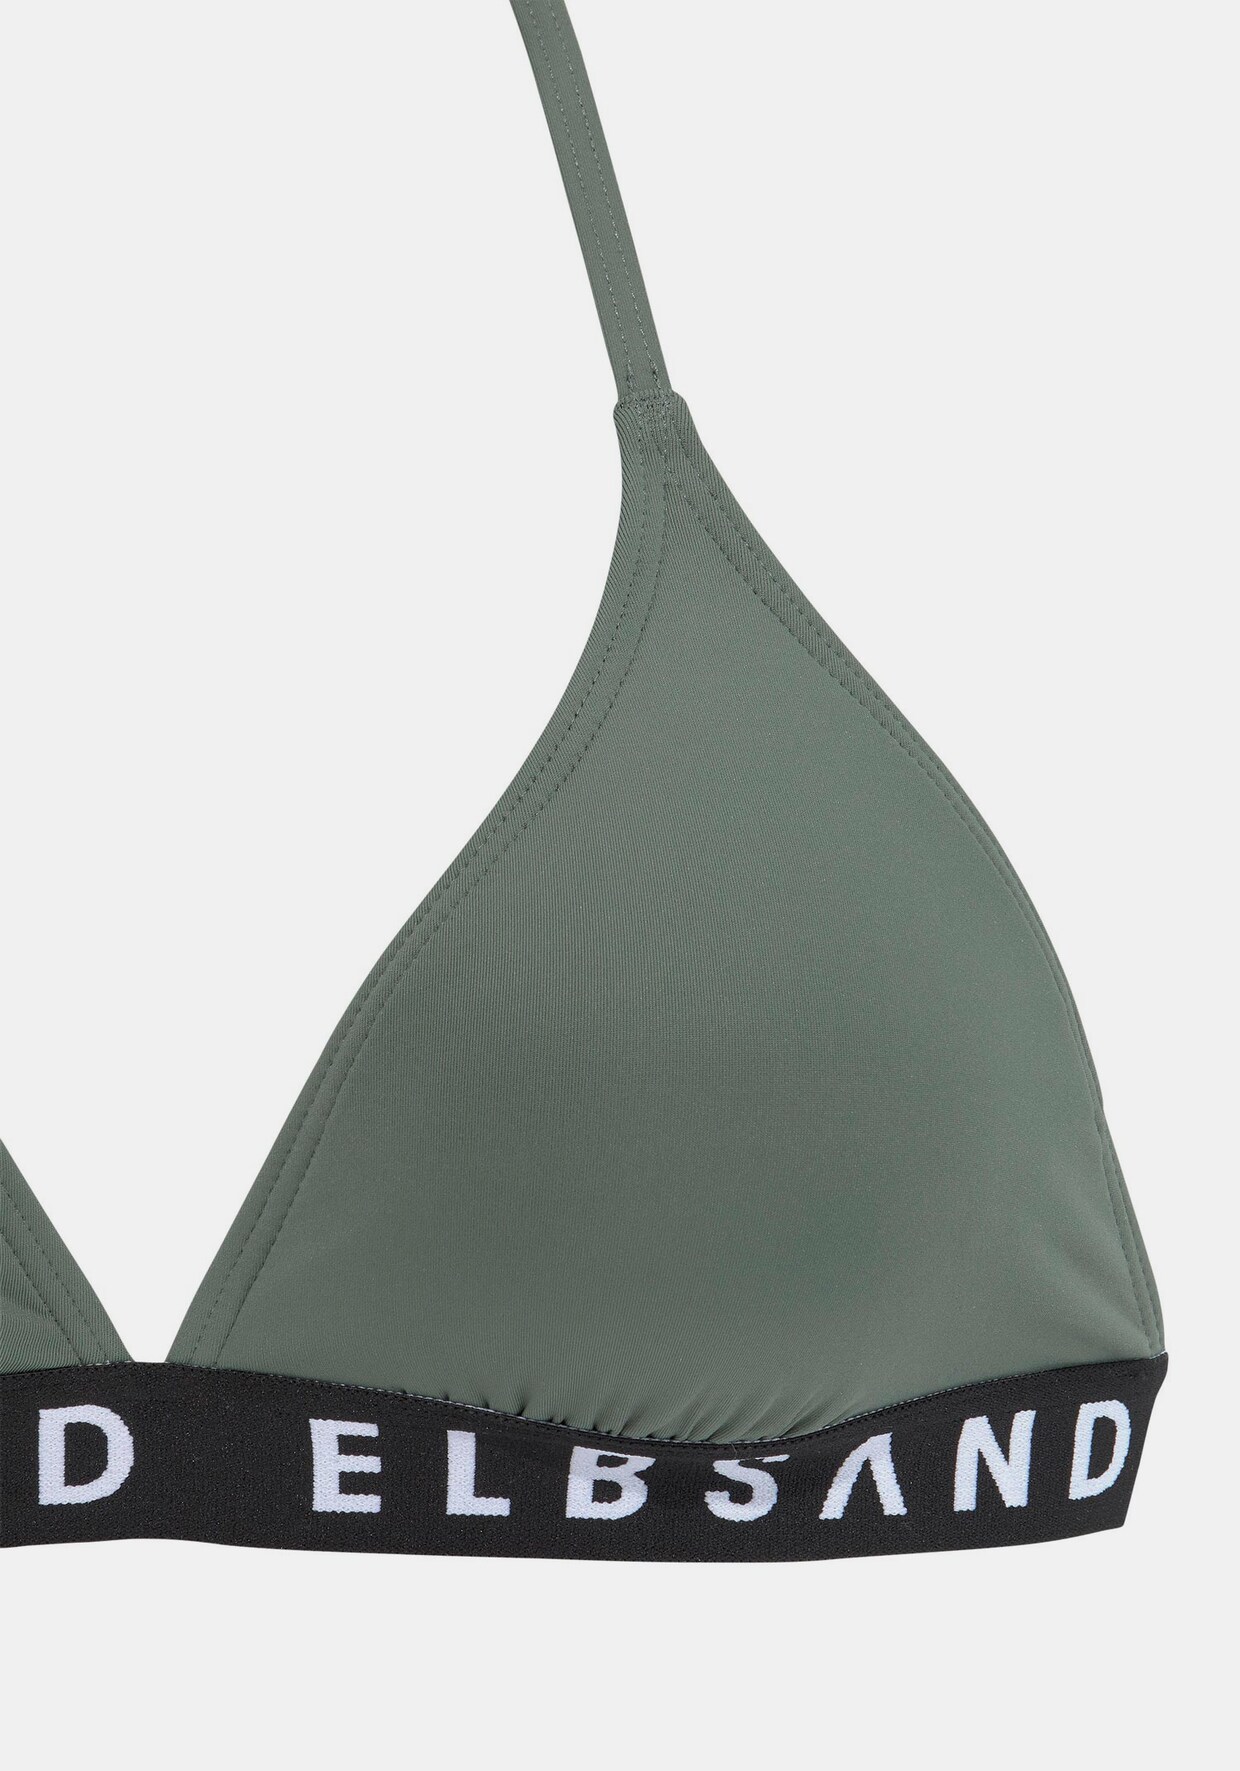 Elbsand Triangel-Bikini - oliv